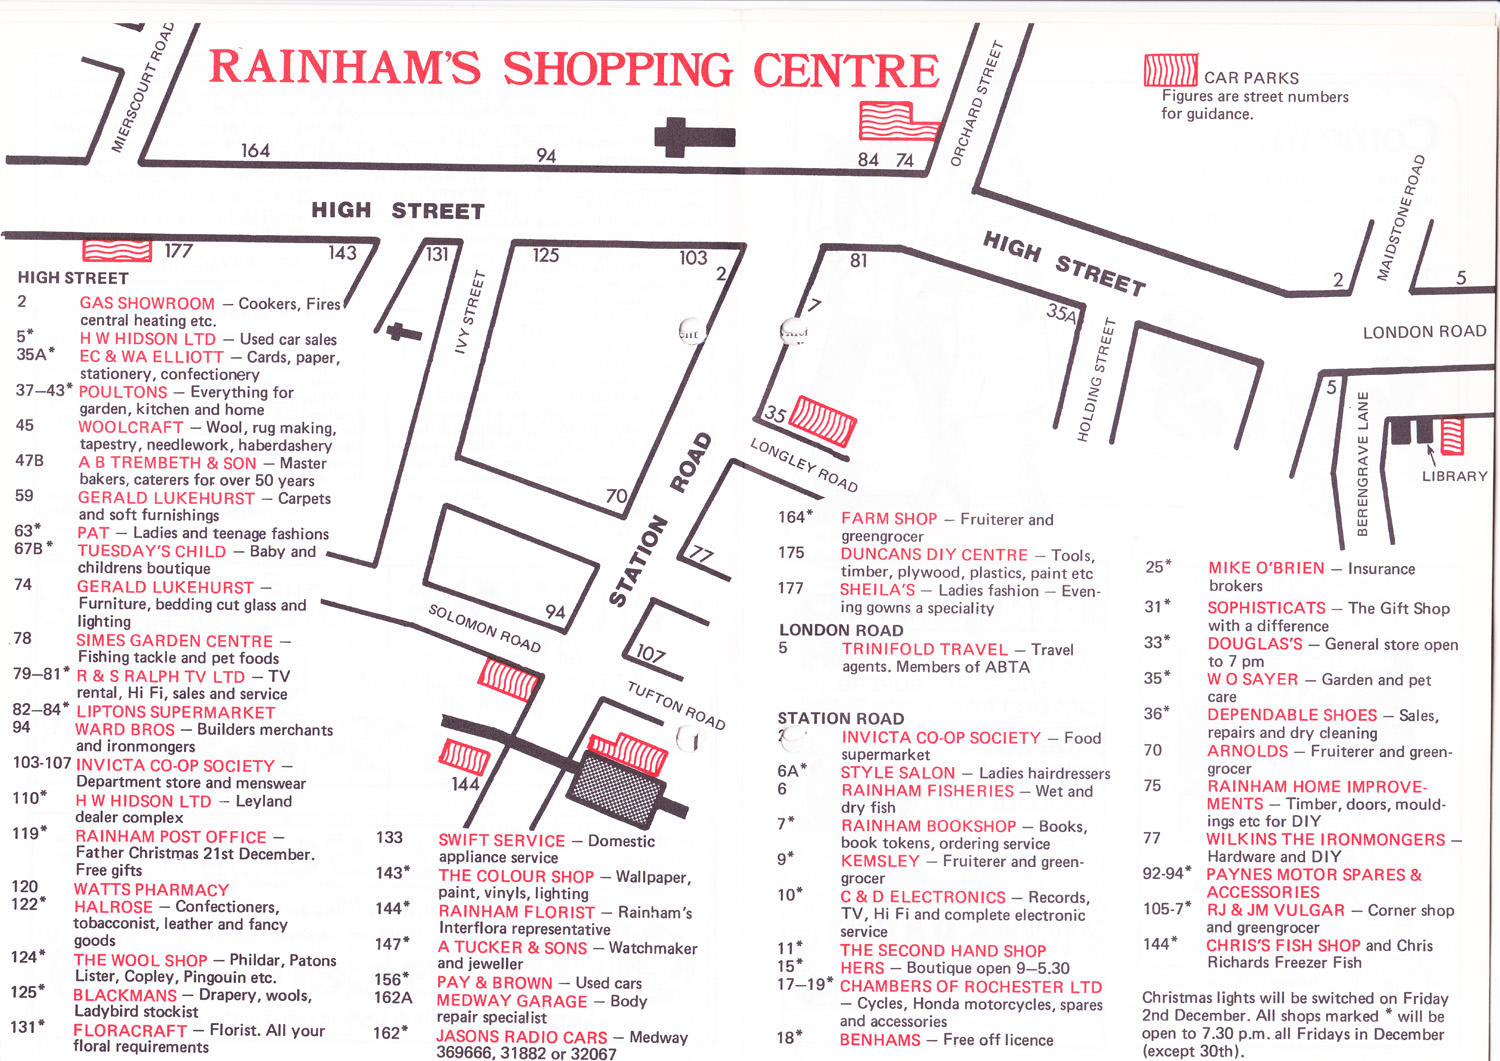 Rainham Shops in November 1977